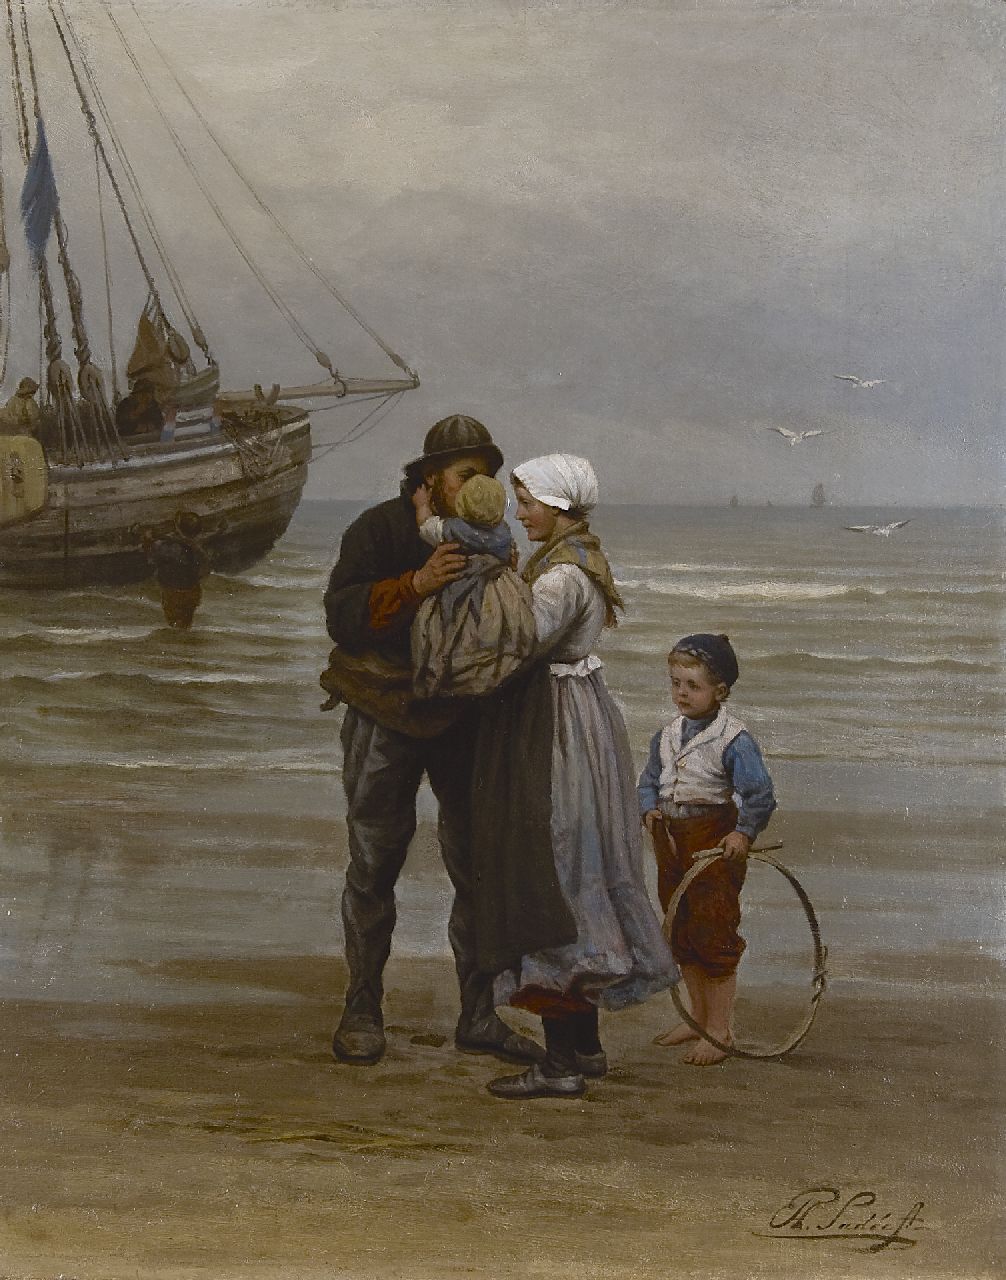 Sadée P.L.J.F.  | Philip Lodewijk Jacob Frederik Sadée, The farwell, Öl auf Leinwand 70,0 x 56,0 cm, signed l.r.